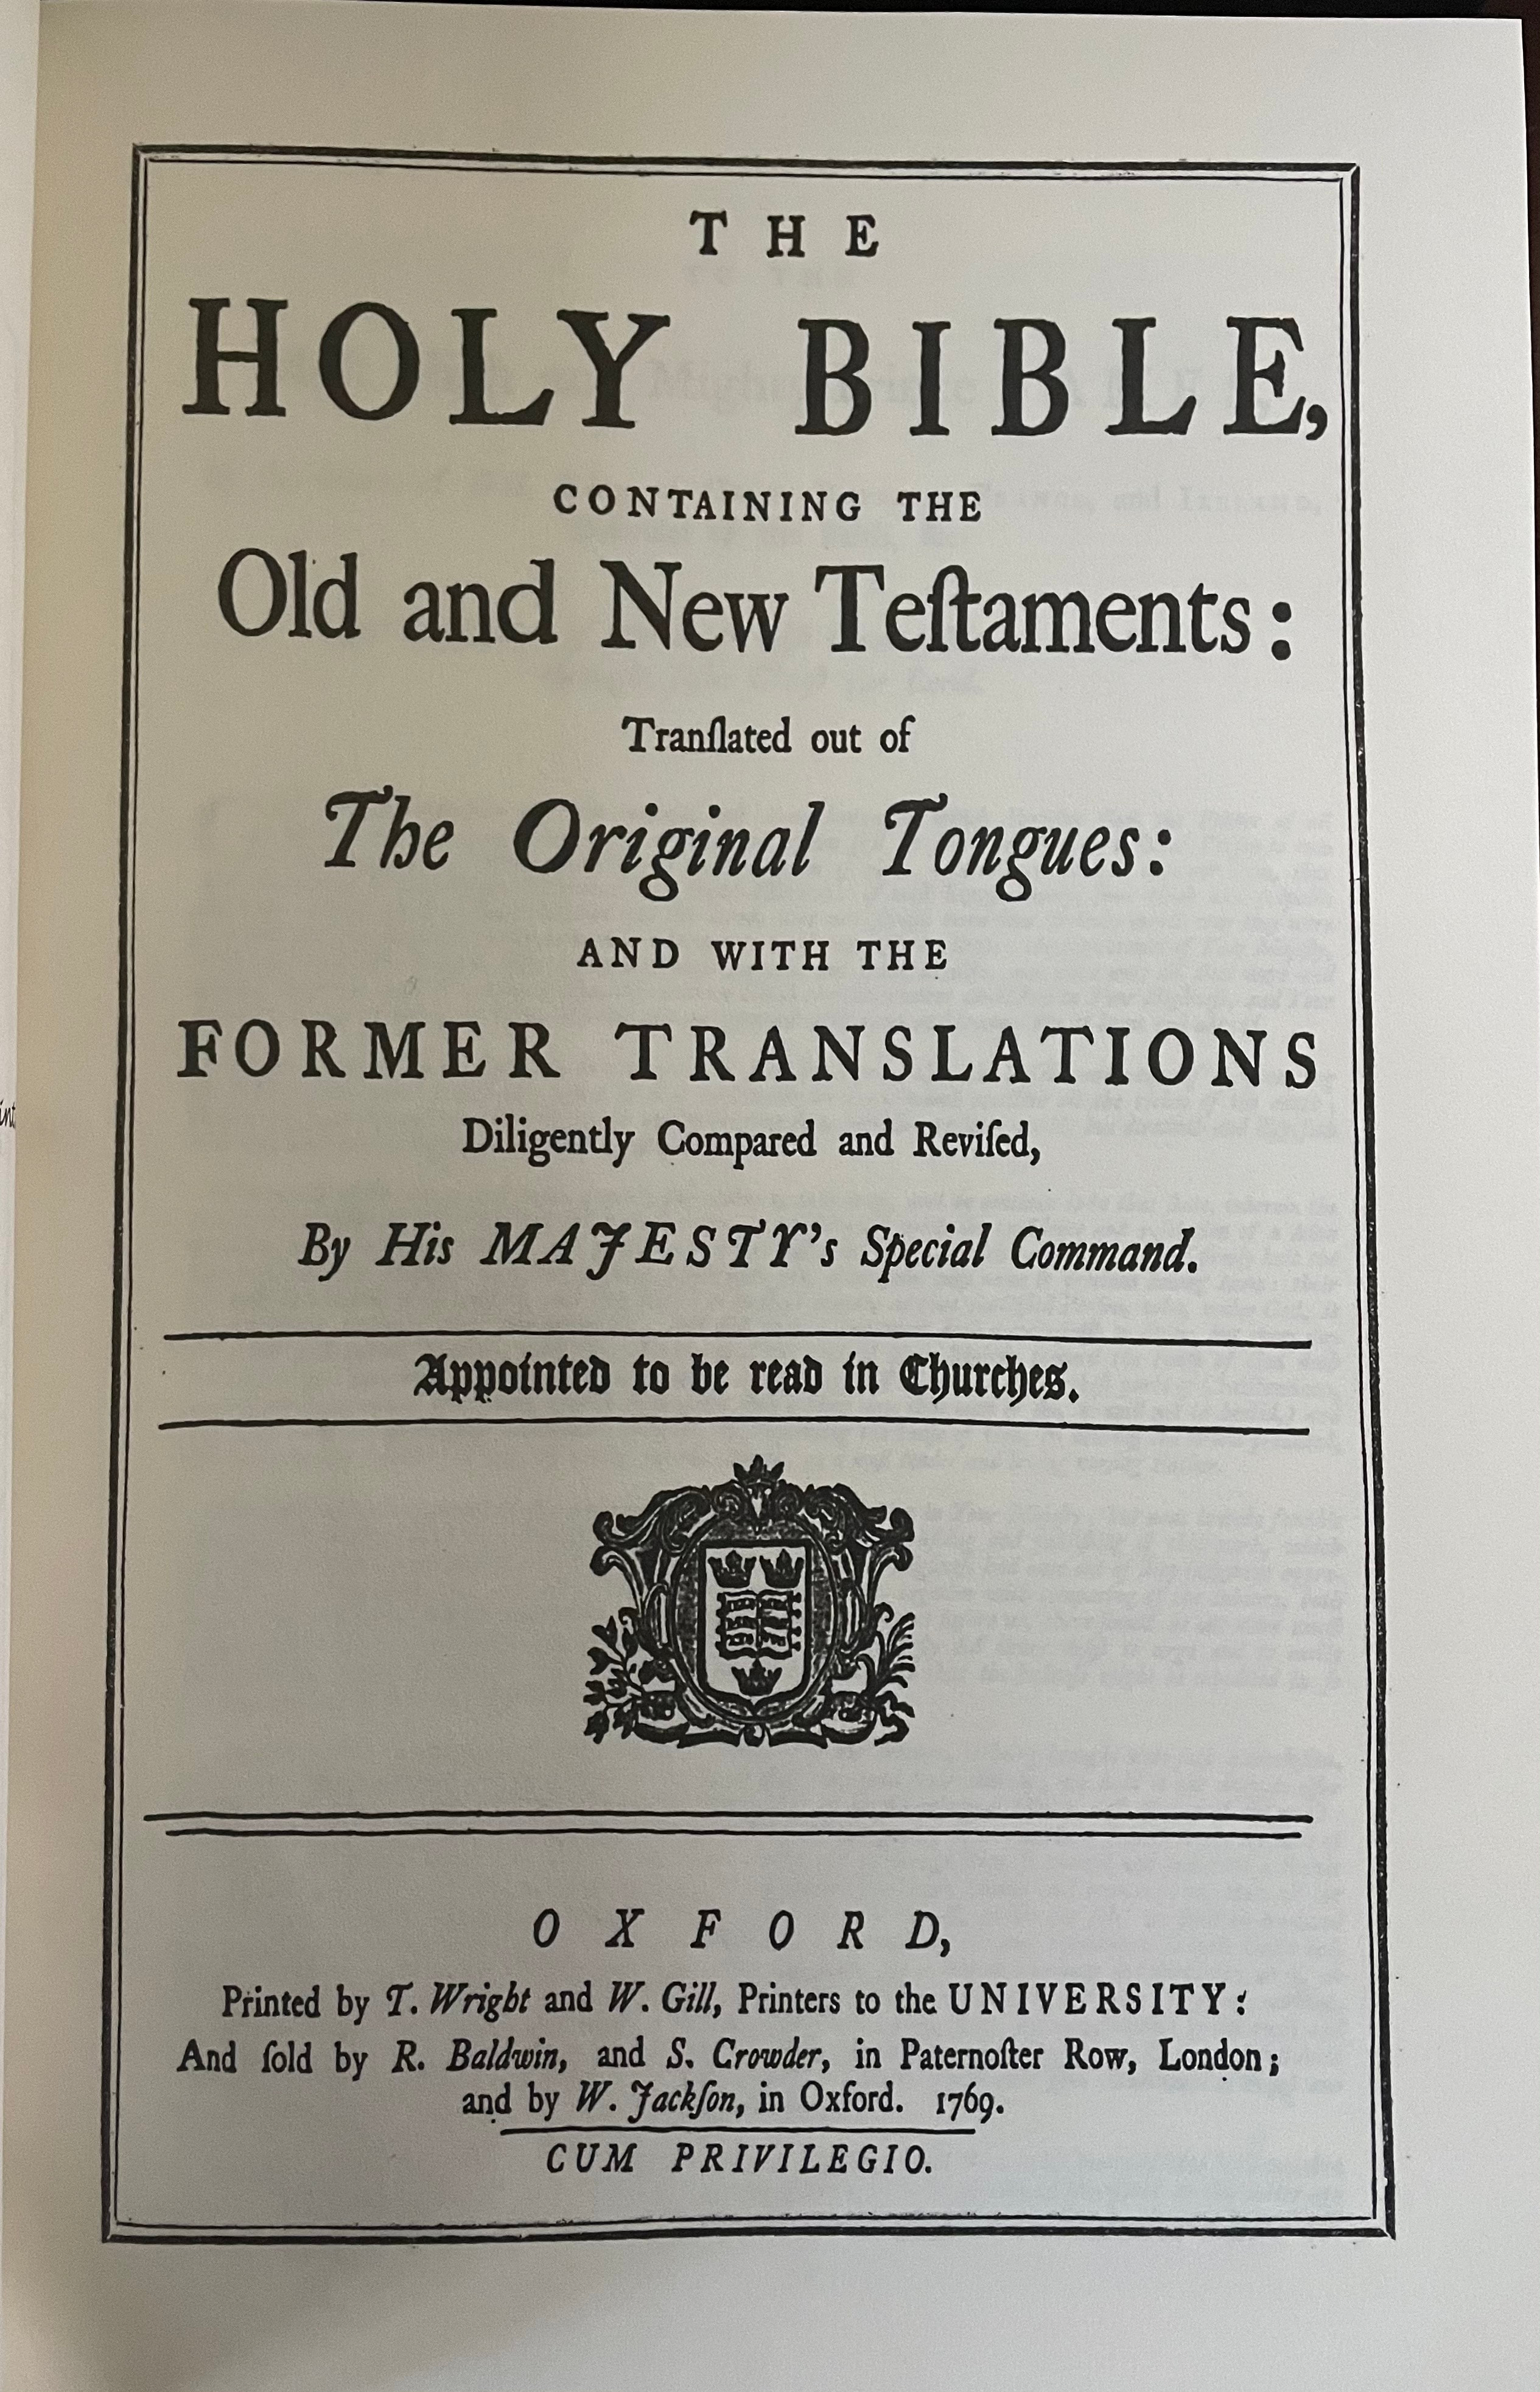 King james bible 1611 - Early modern english